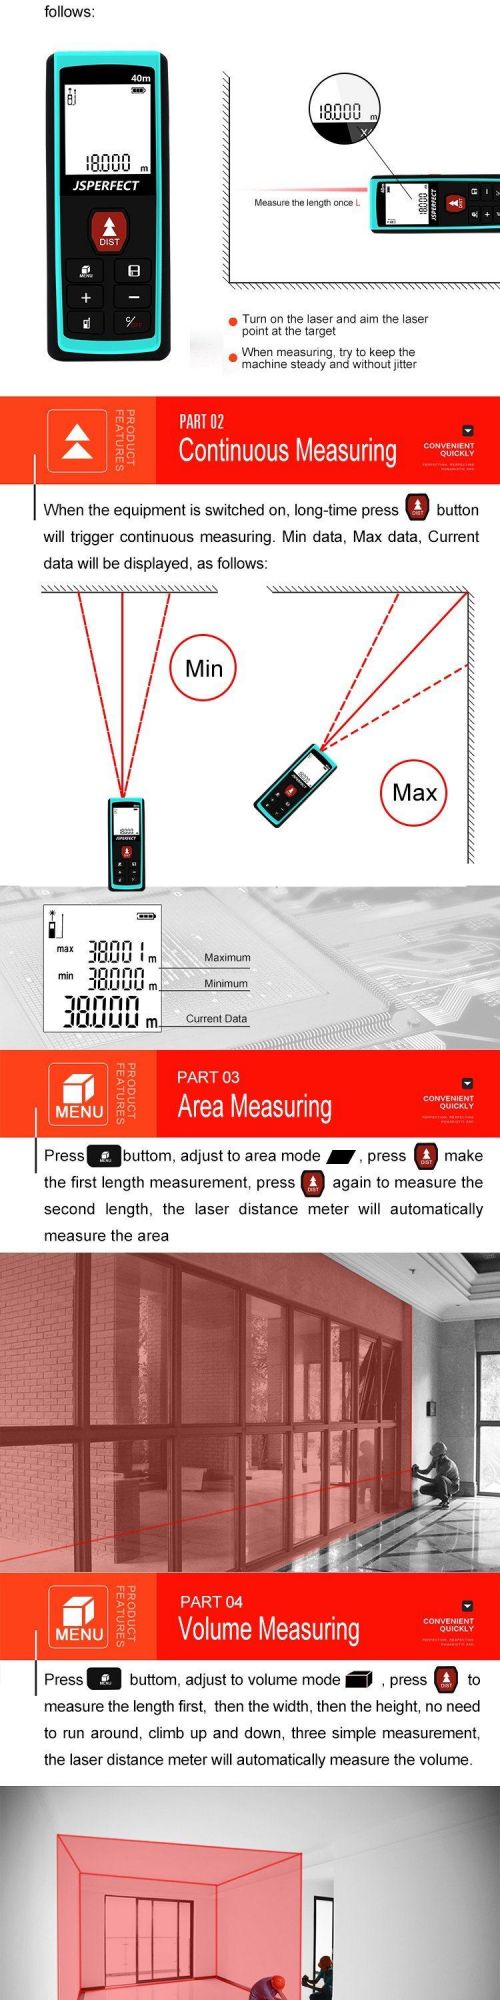 40m Handheld Area Measuring Meter Laser Distance